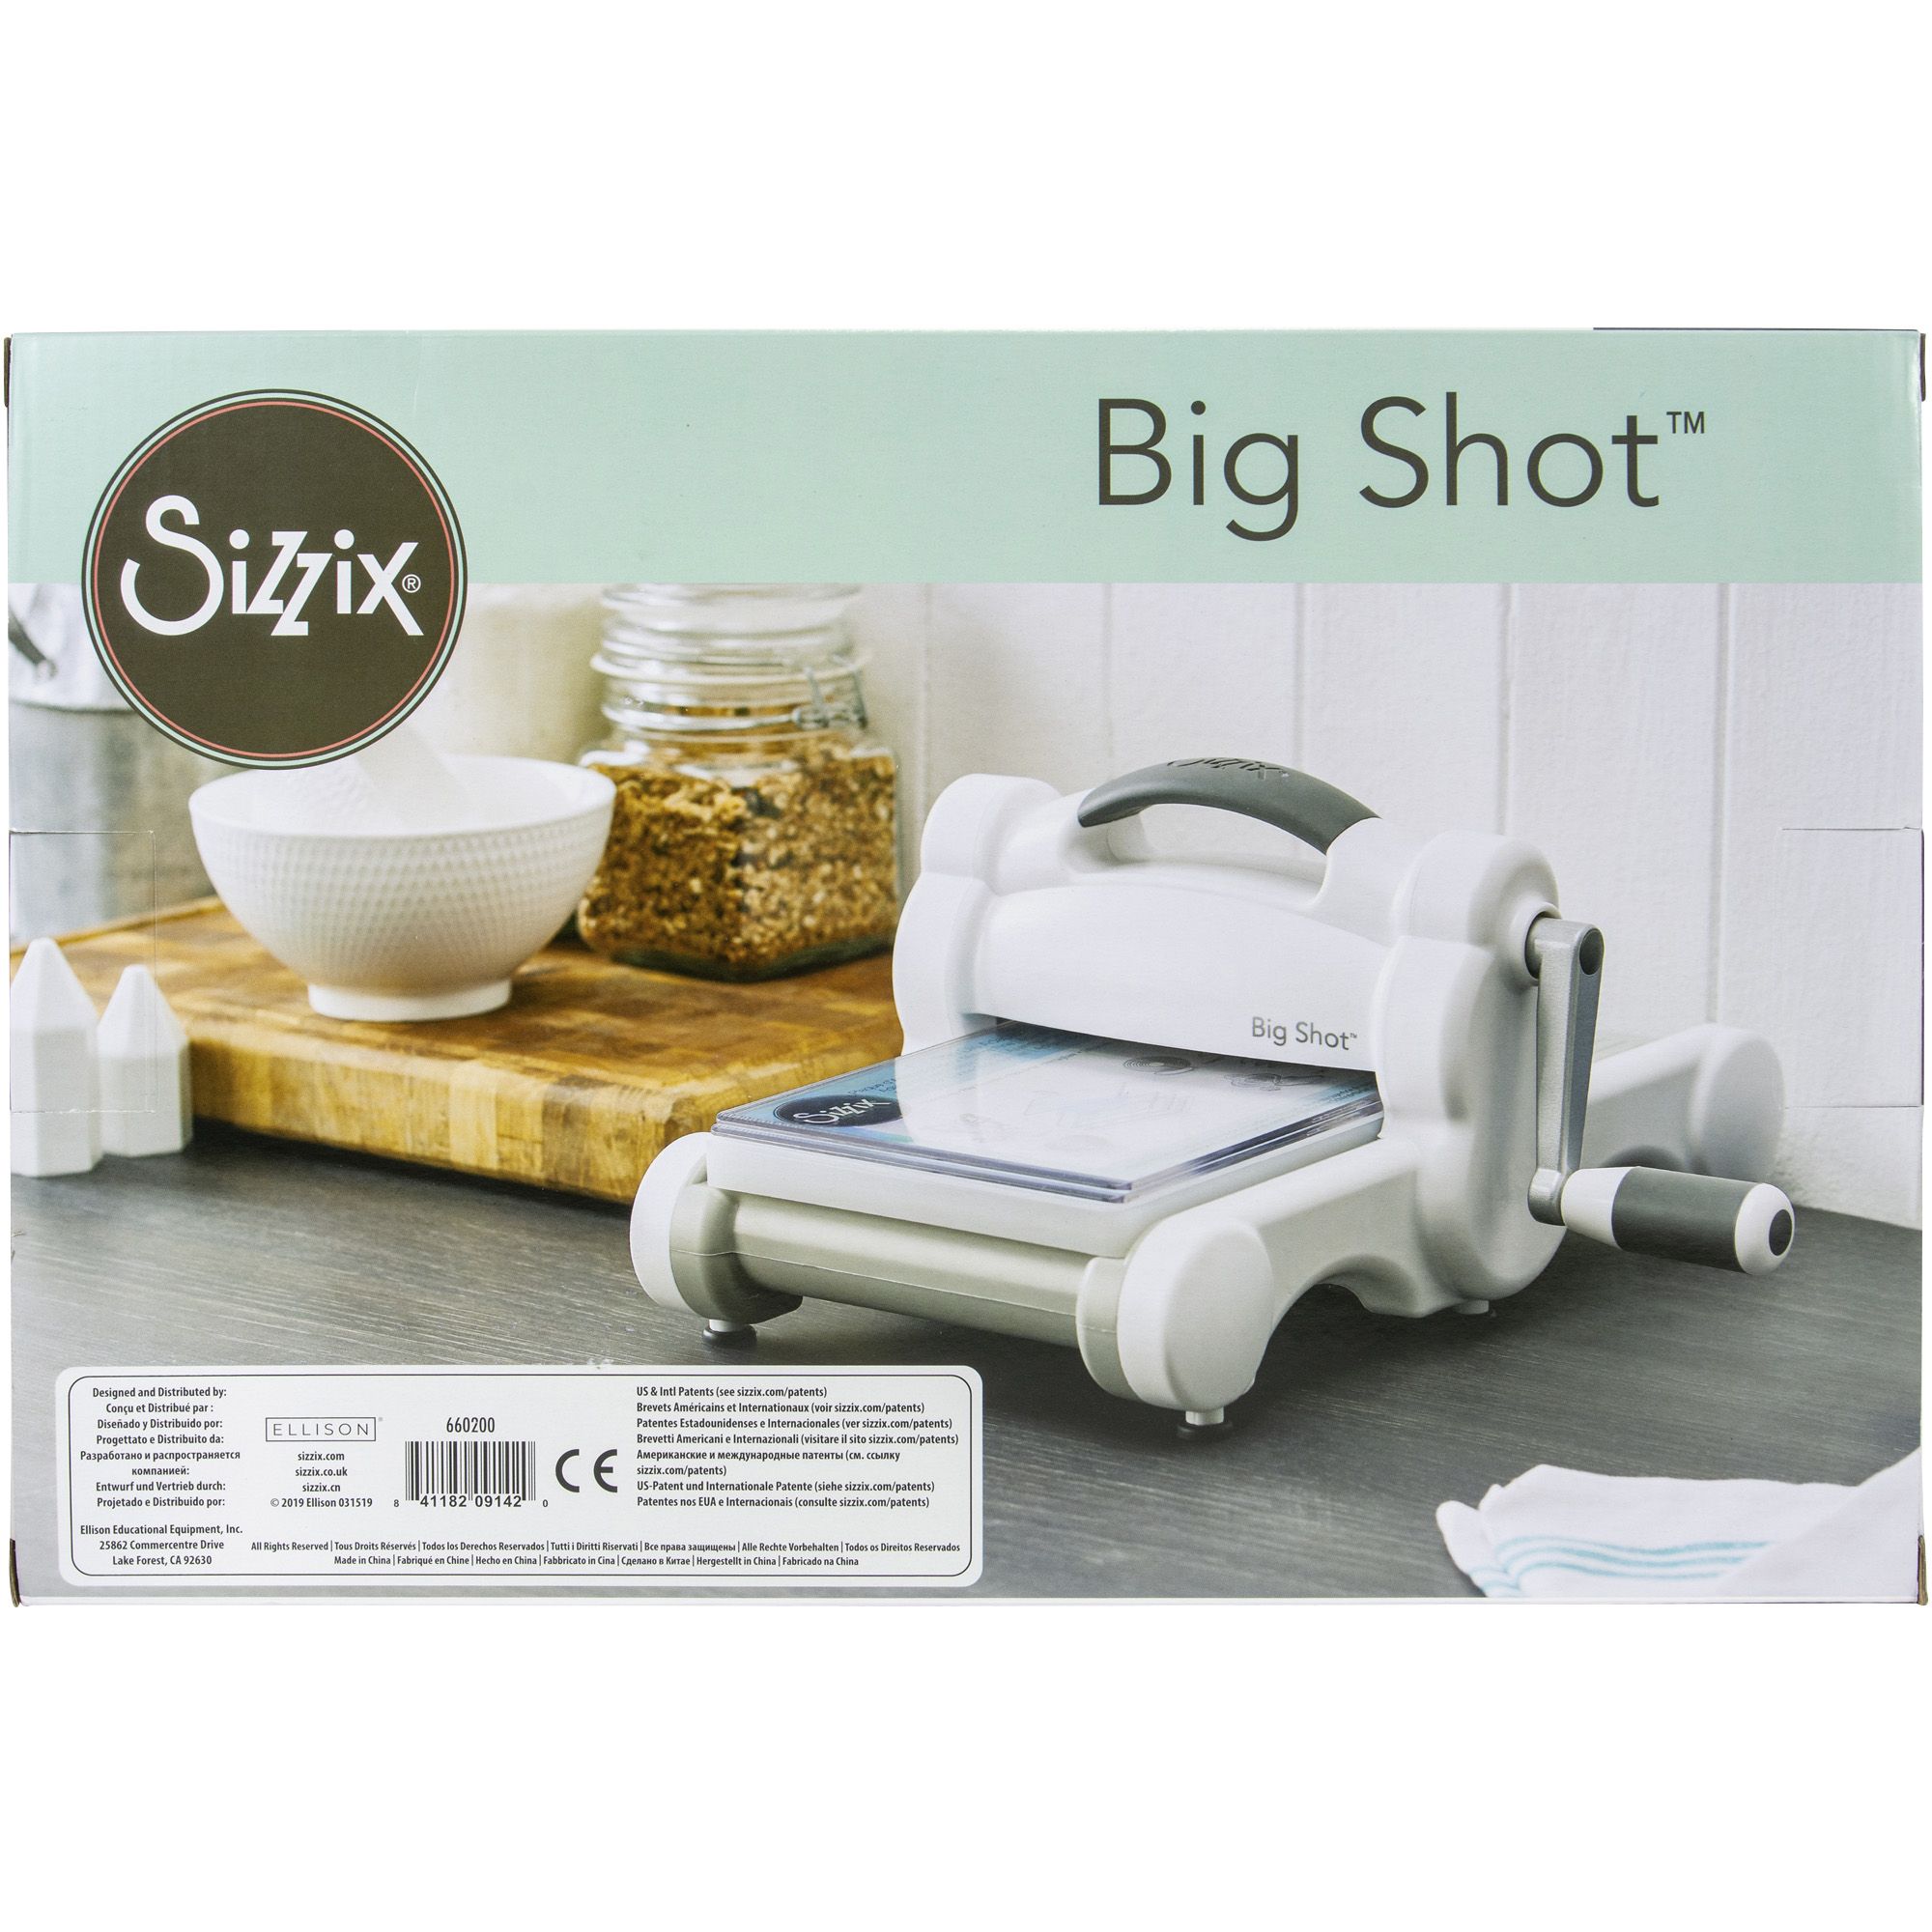 Sizzix Big Shot Machine Review: Hand-Cranked Crafting